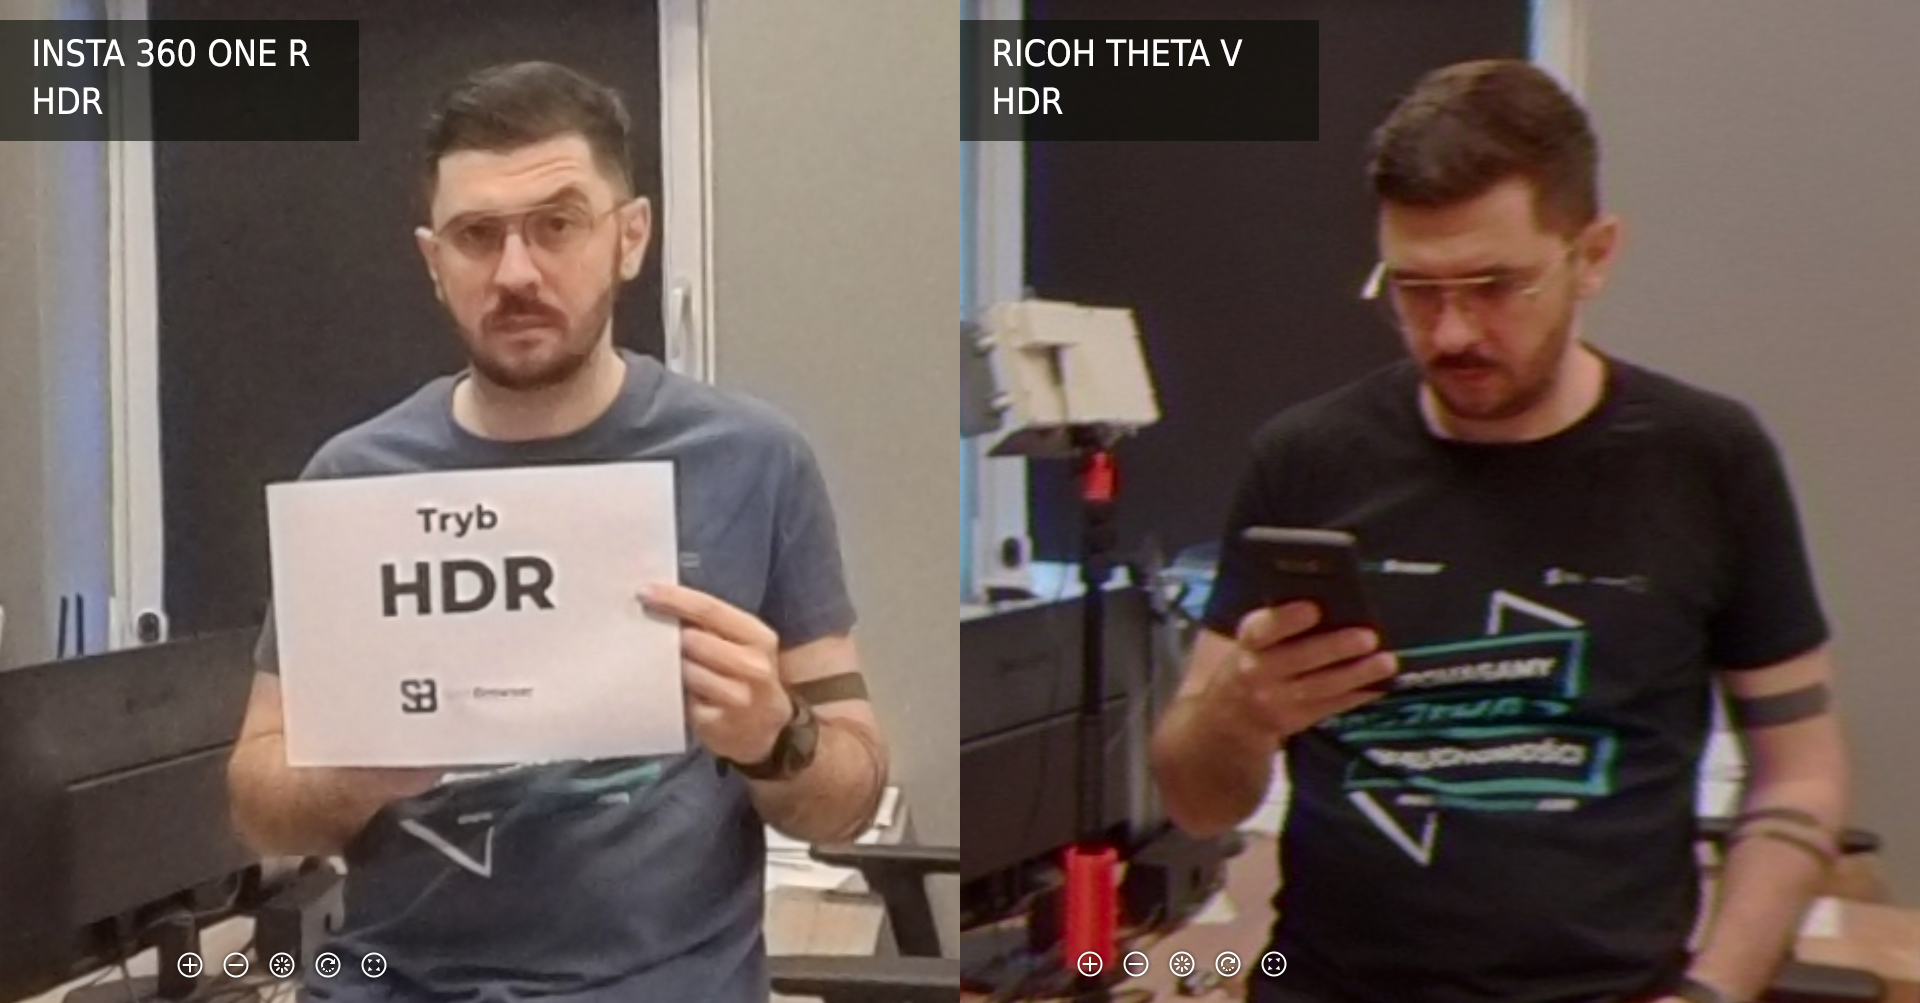 Ricoh Theta V vs Insta 360 One R tryb HDR